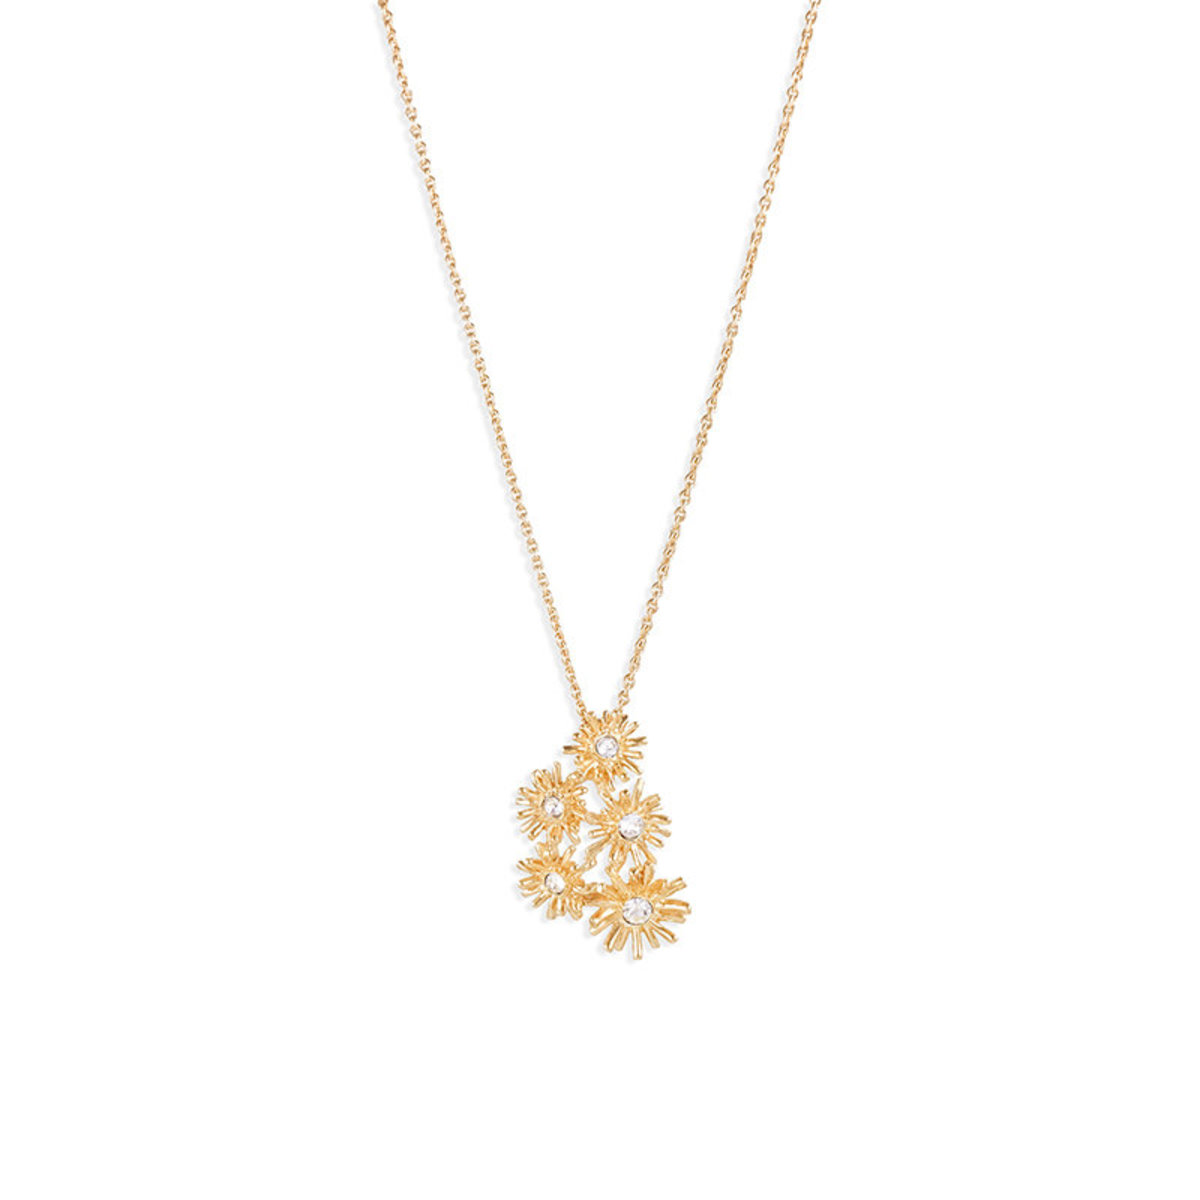 Bouquet: gold plating, rhinstone, pendant necklace